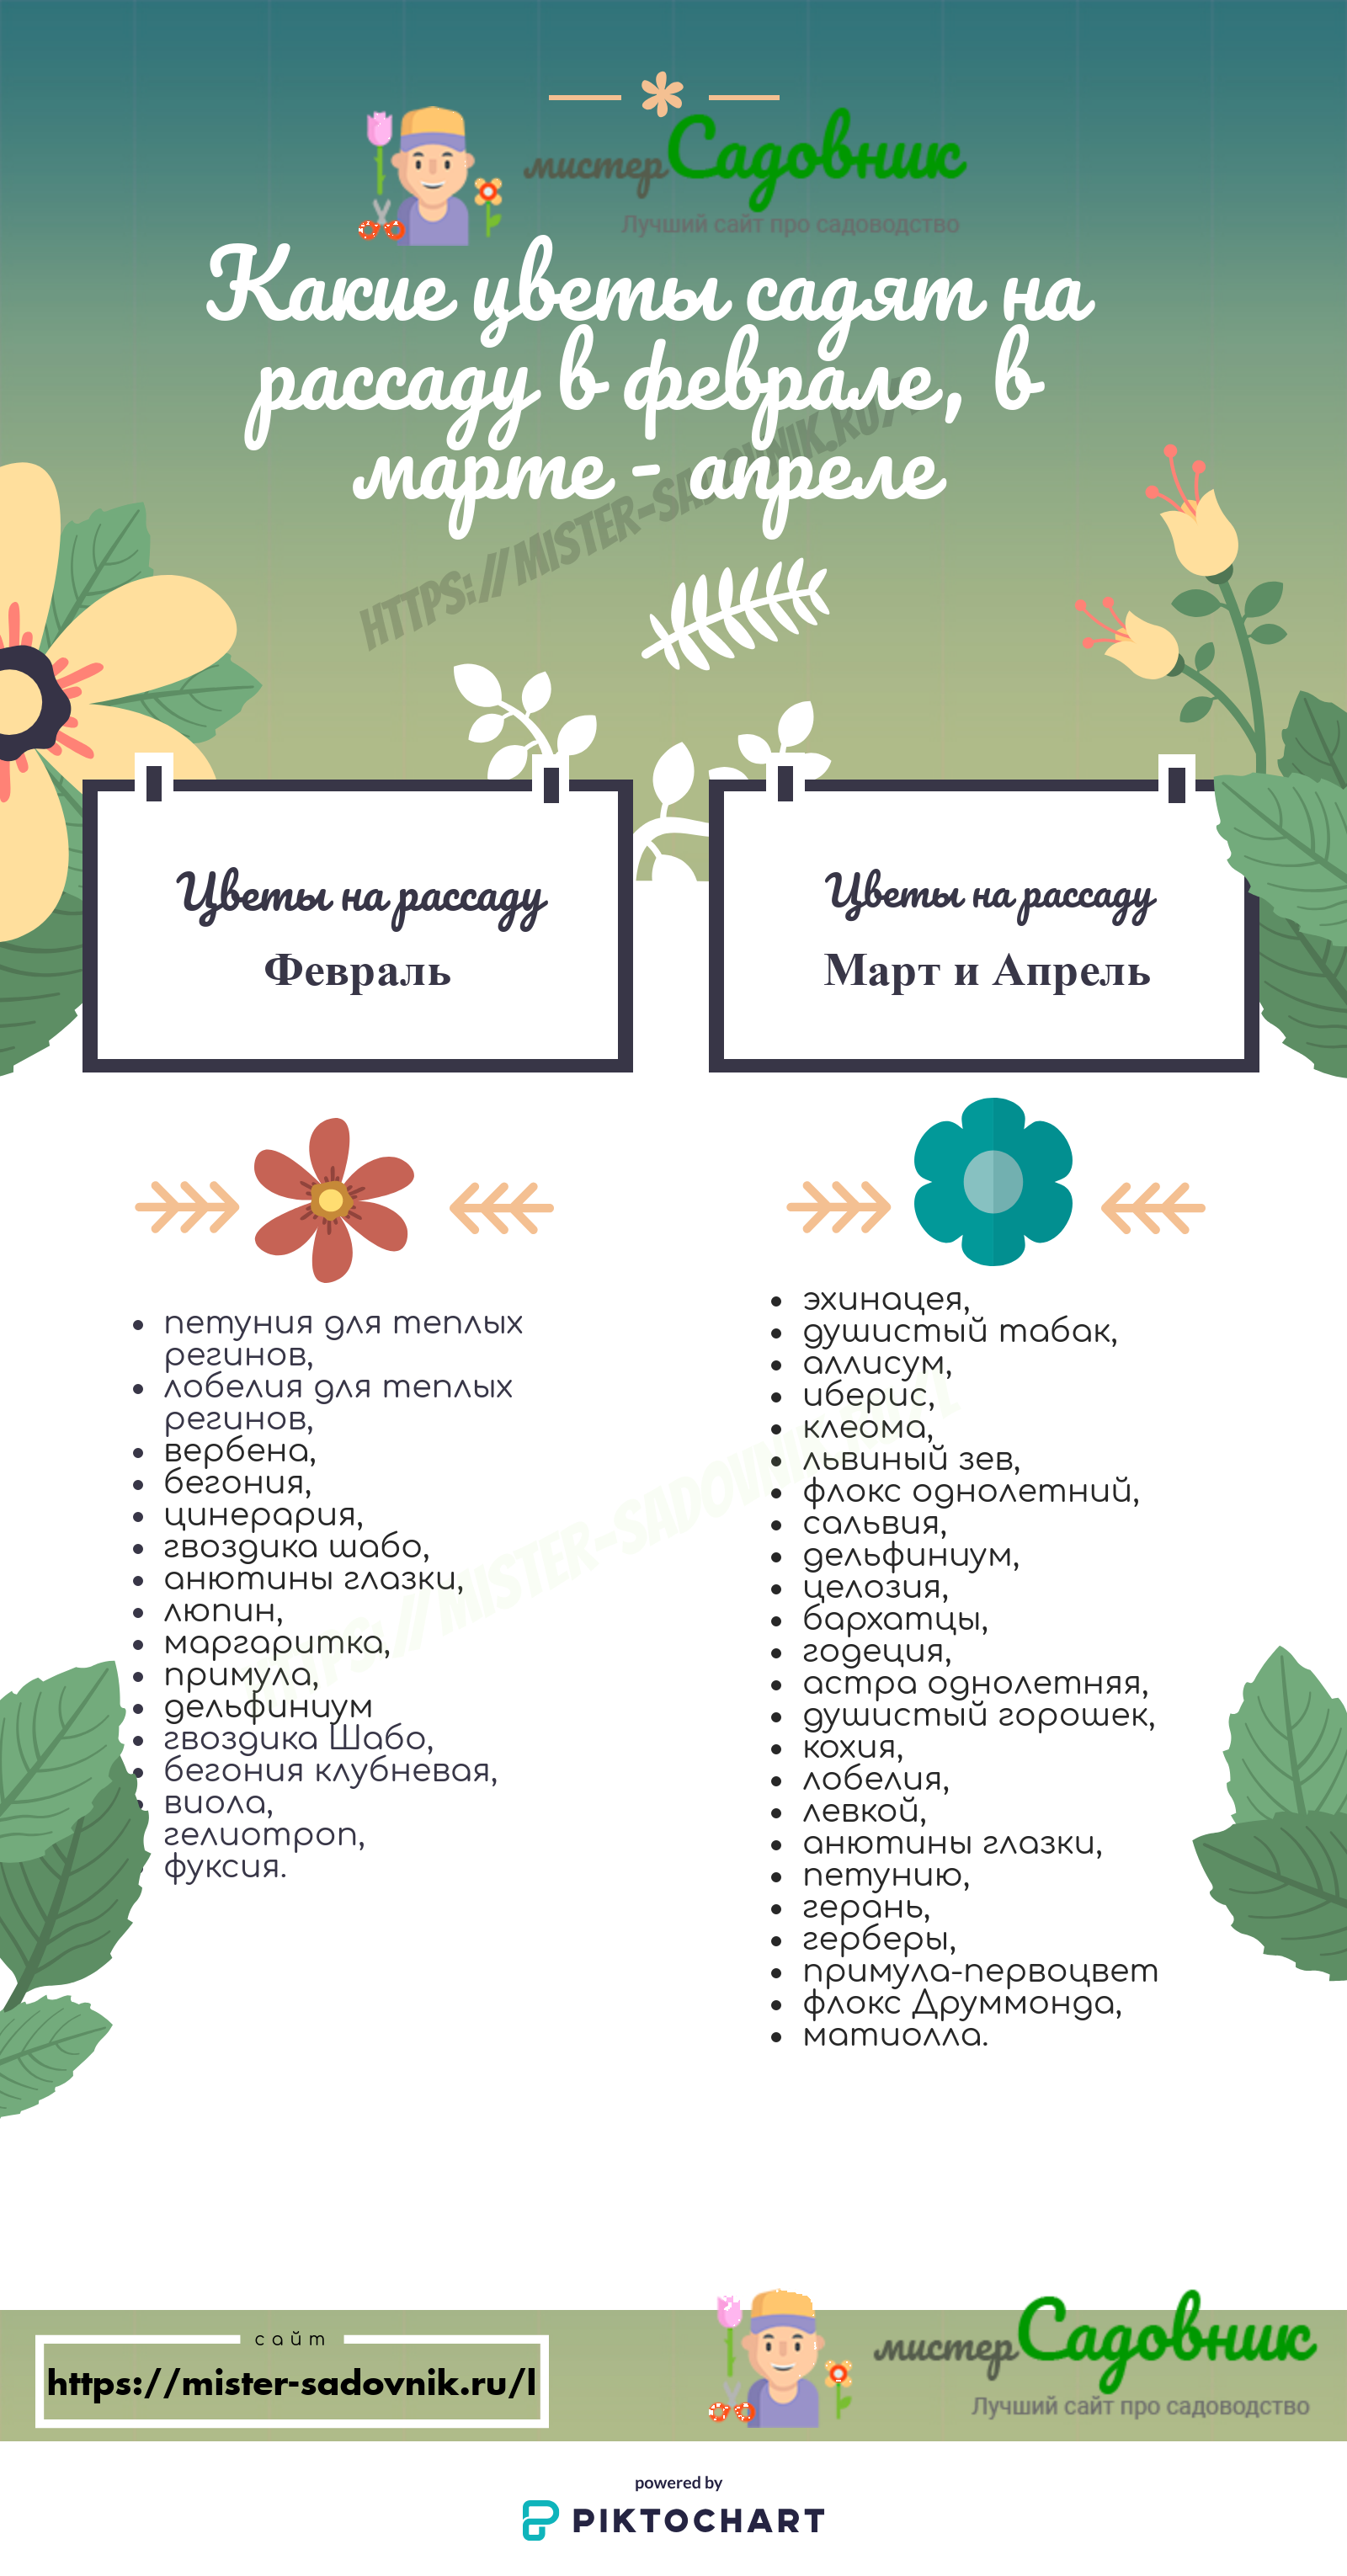 Цветок годеция: фото, описание, посадка и уход в открытом грунте - sadovnikam.ru